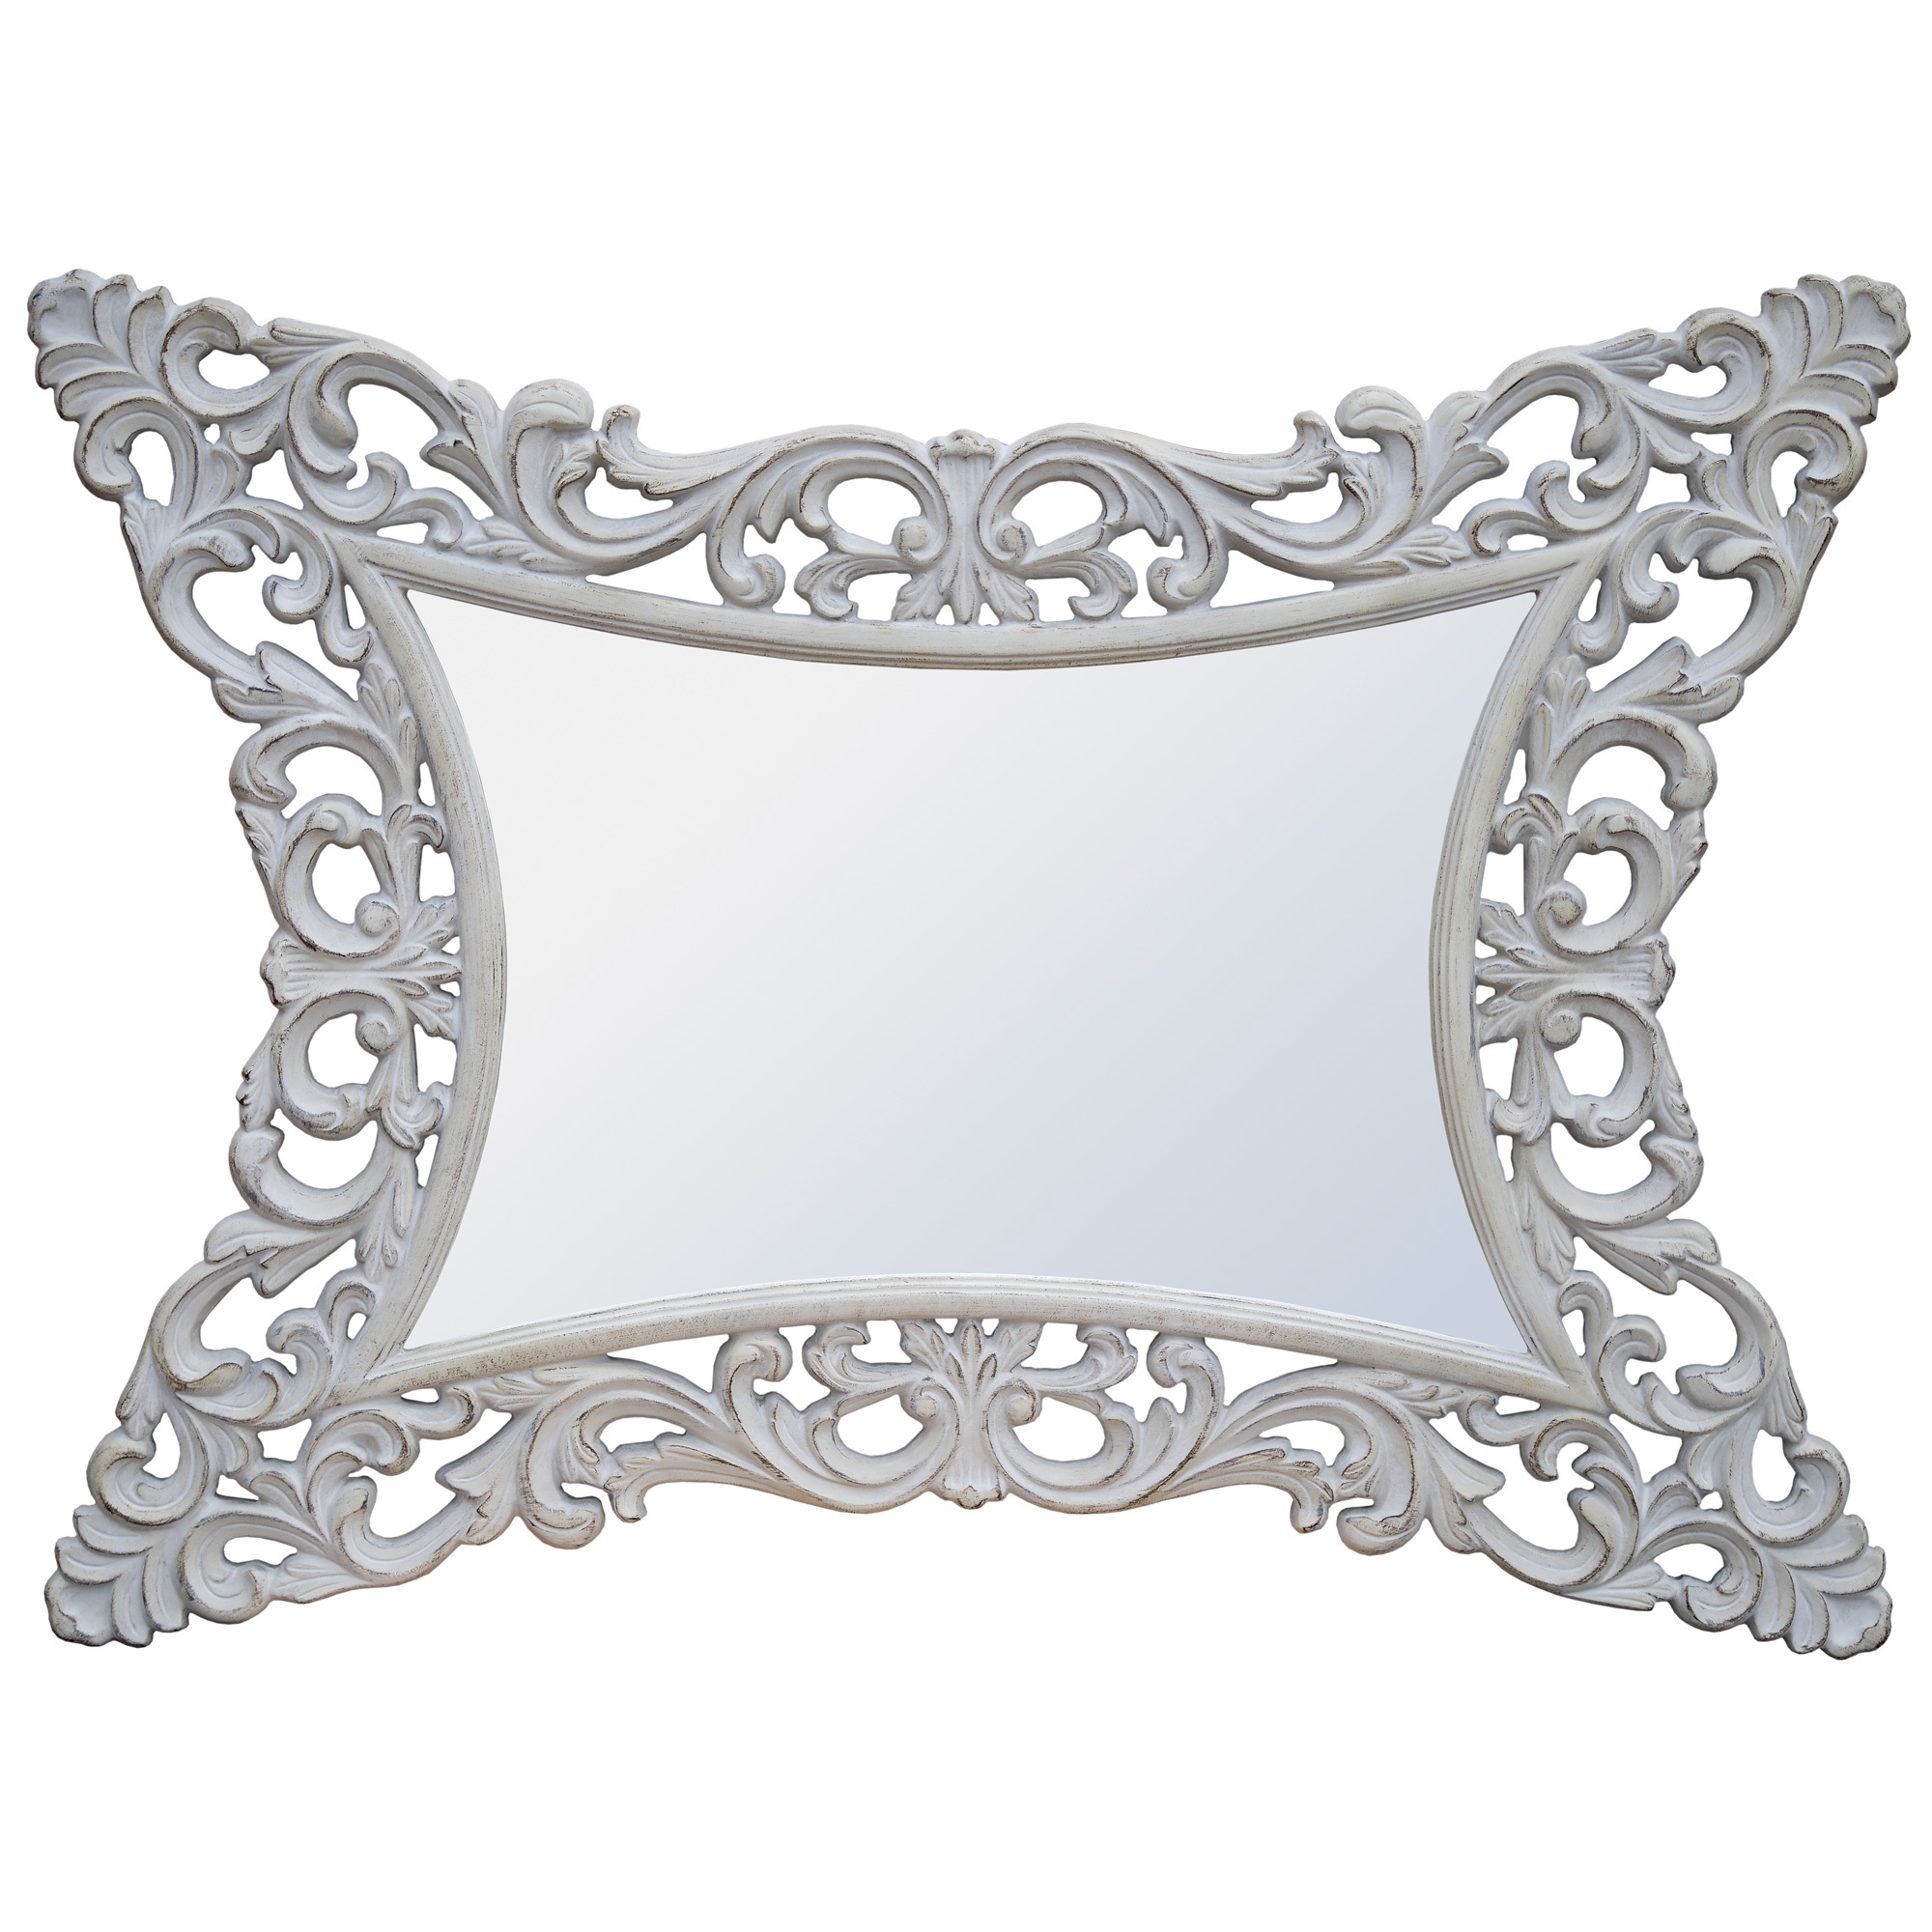 Rococo Style Boudoir Provence Antique White Decorative Wall Bedroom Mirror